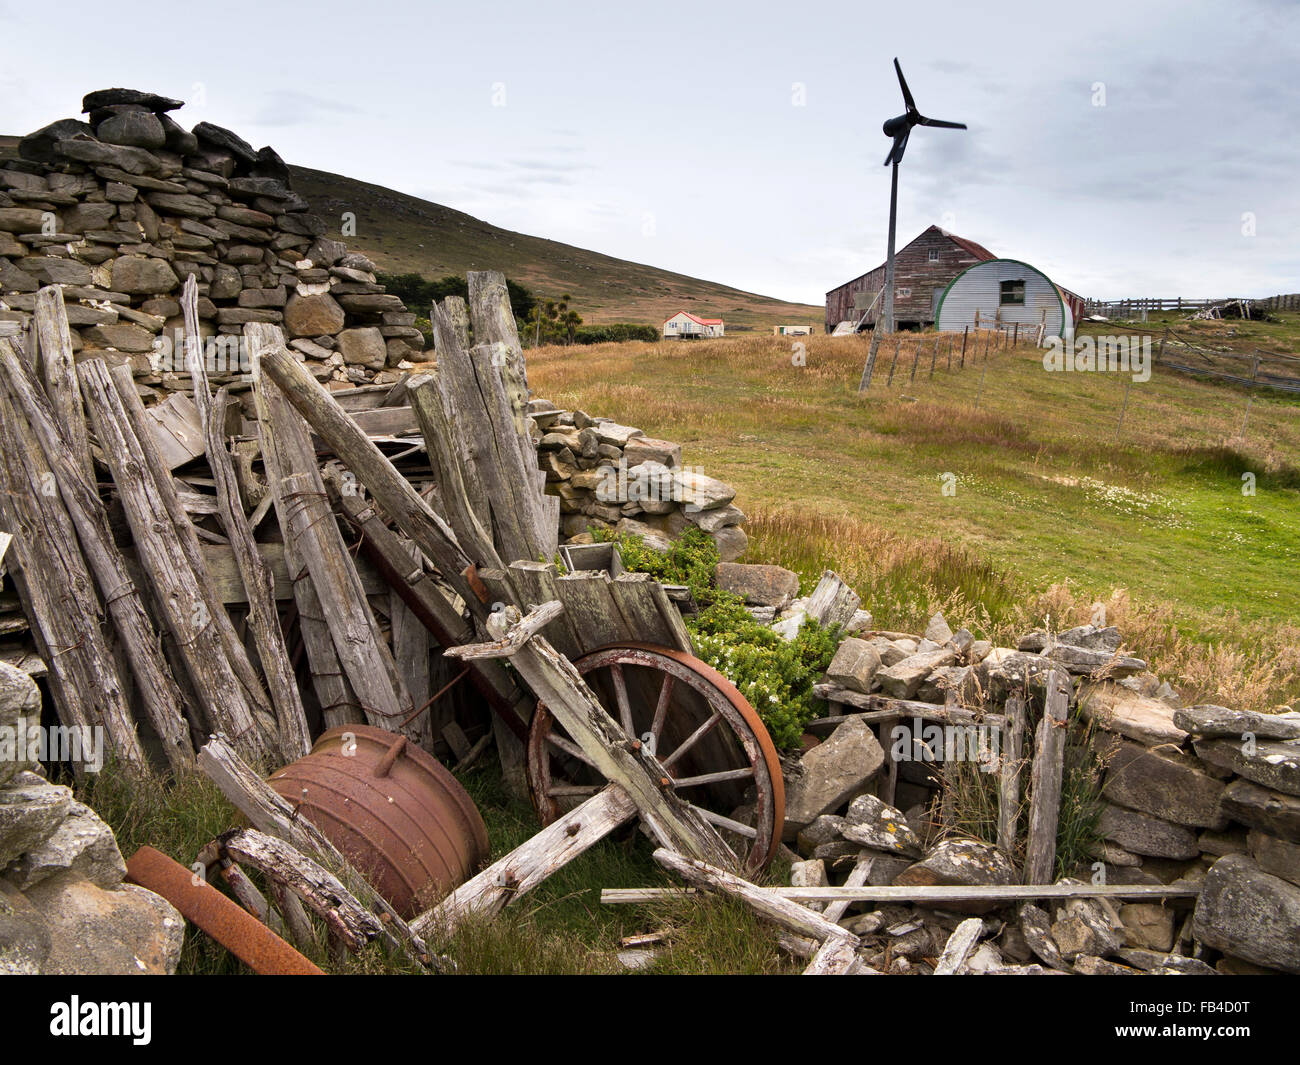 Südatlantik, Falkland-Inseln, Karkasse Insel, McGill Siedlung, alte redundante landwirtschaftliche Geräte Stockfoto